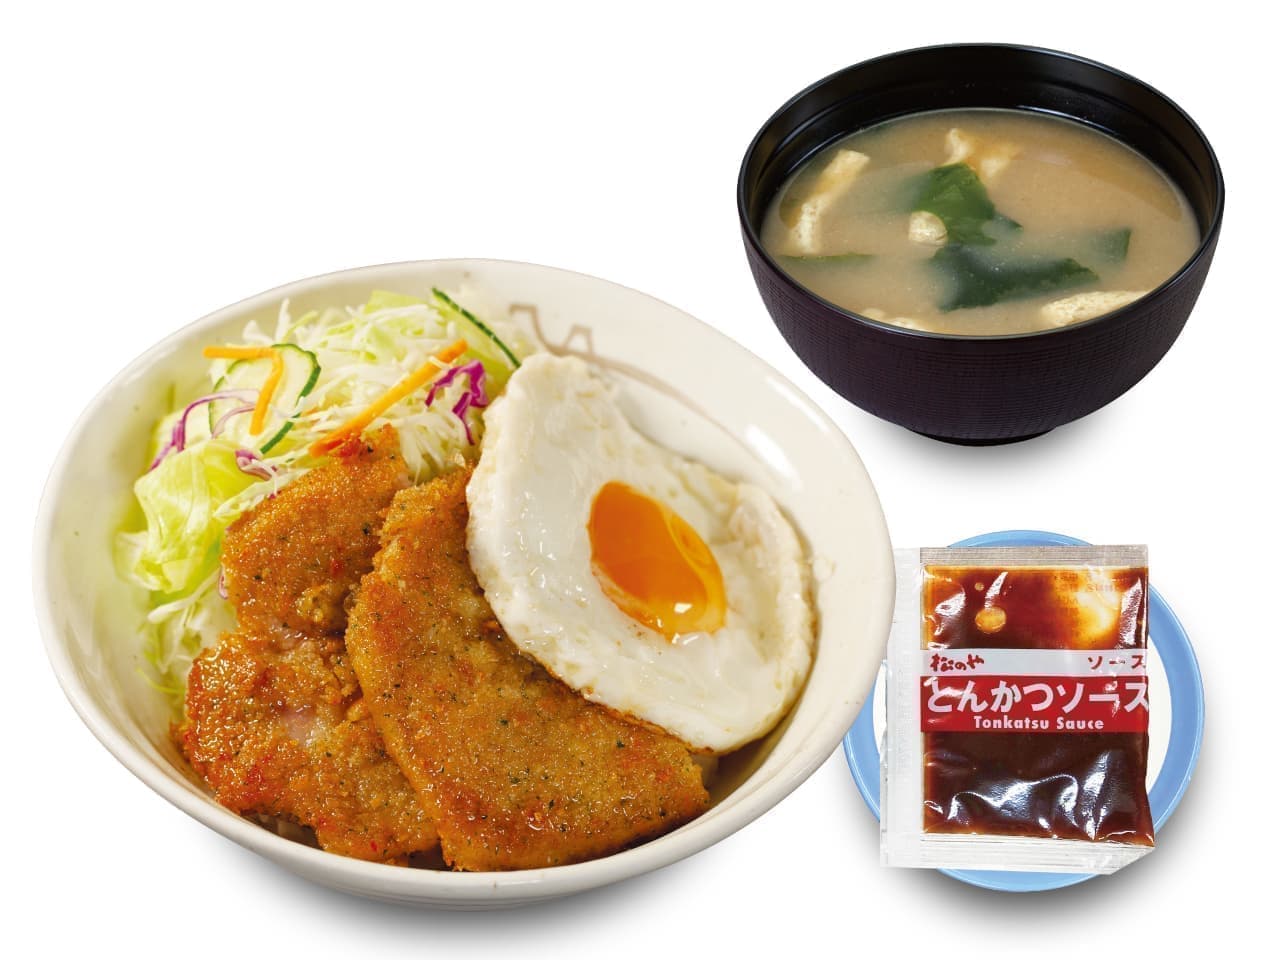 Matsuya "Sauce-roasted pork cutlet bowl